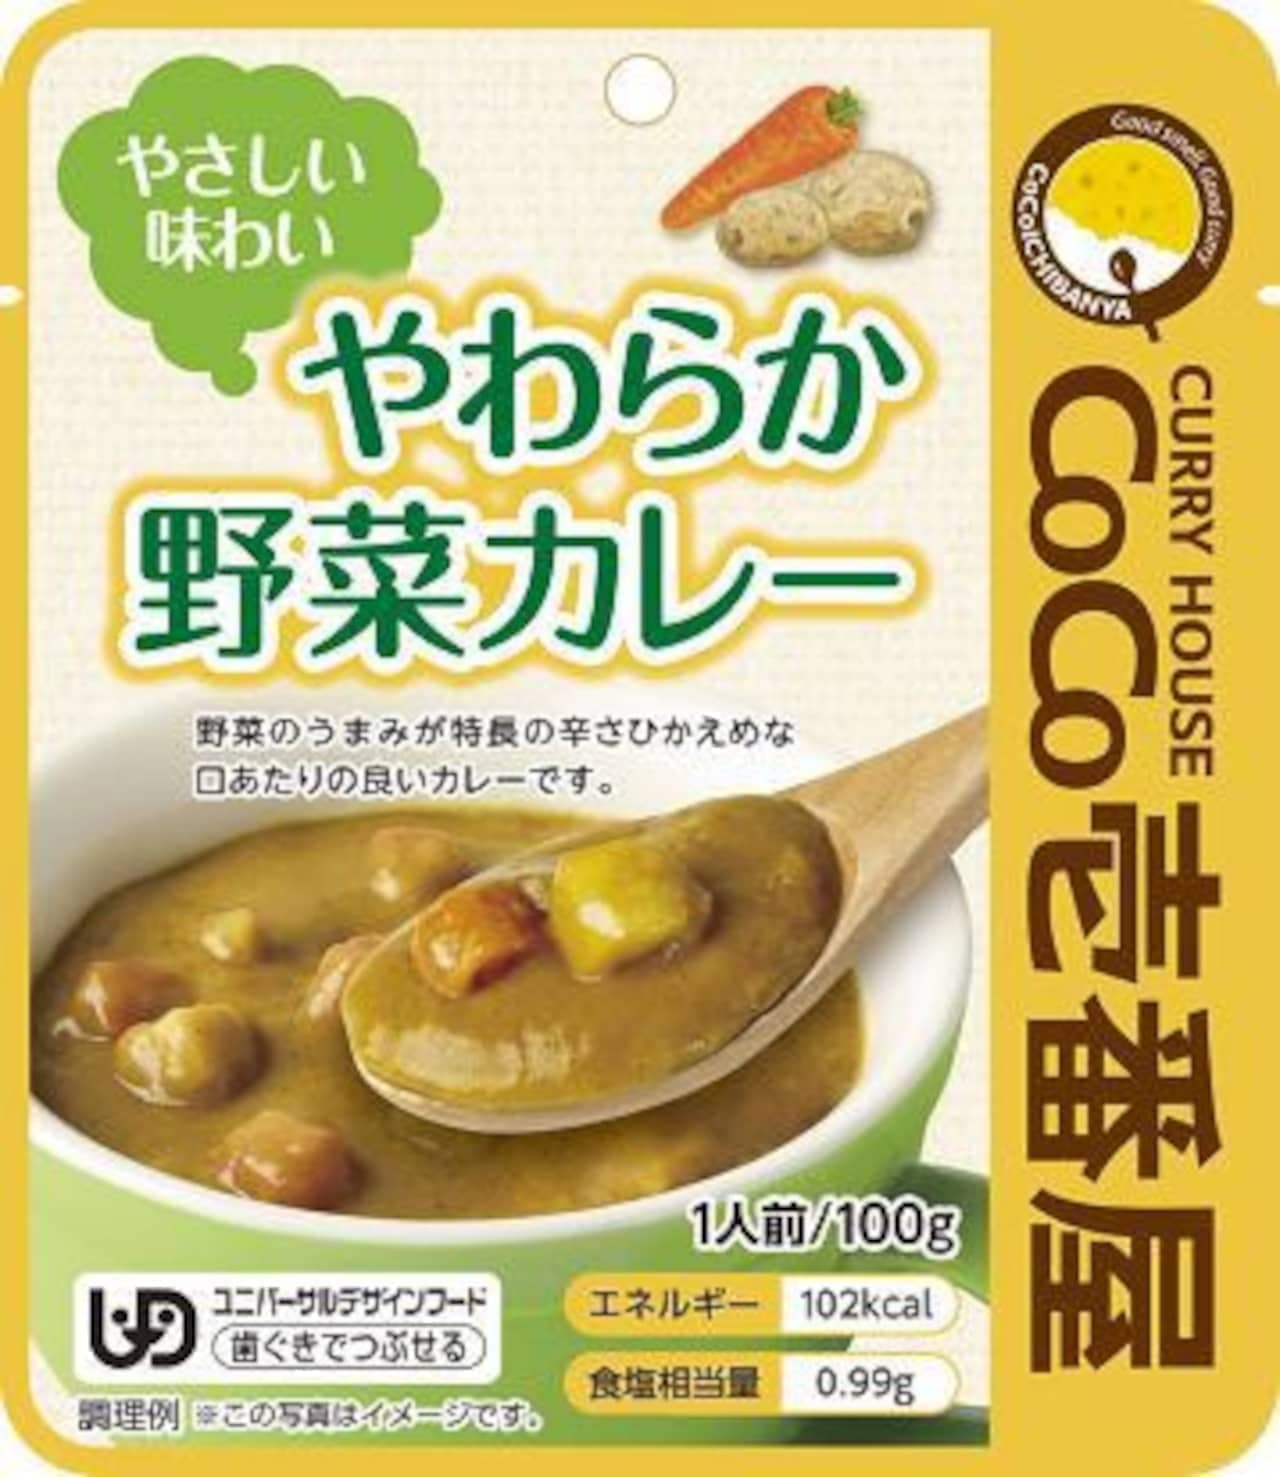 Coco Ich "Yawaraka Vegetable Curry